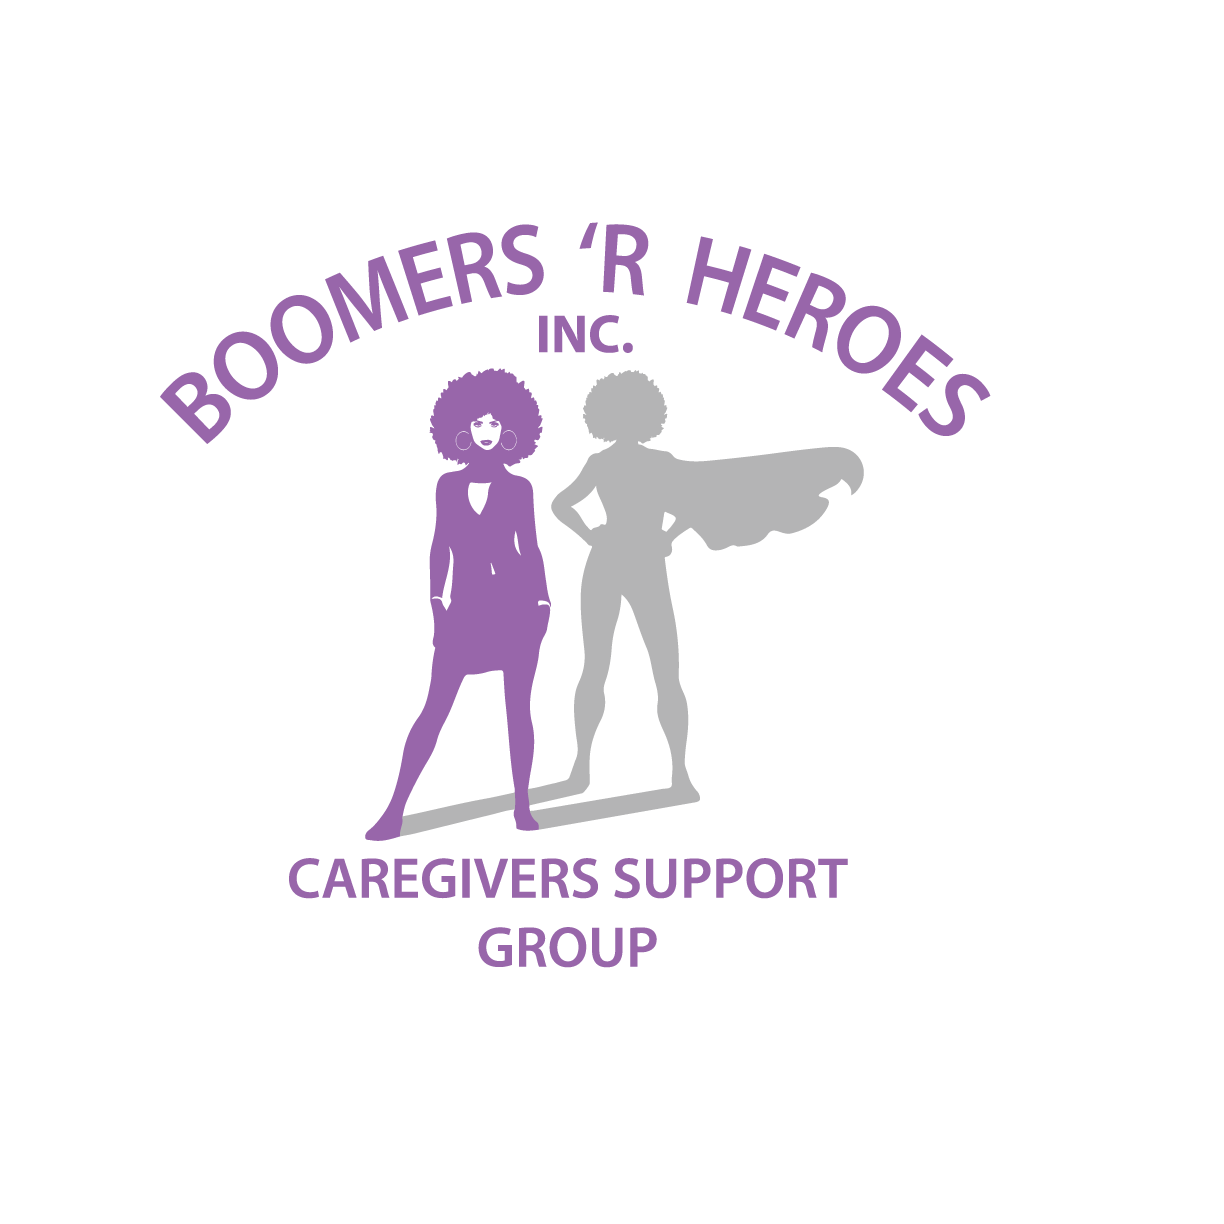 Boomers 'R Heroes